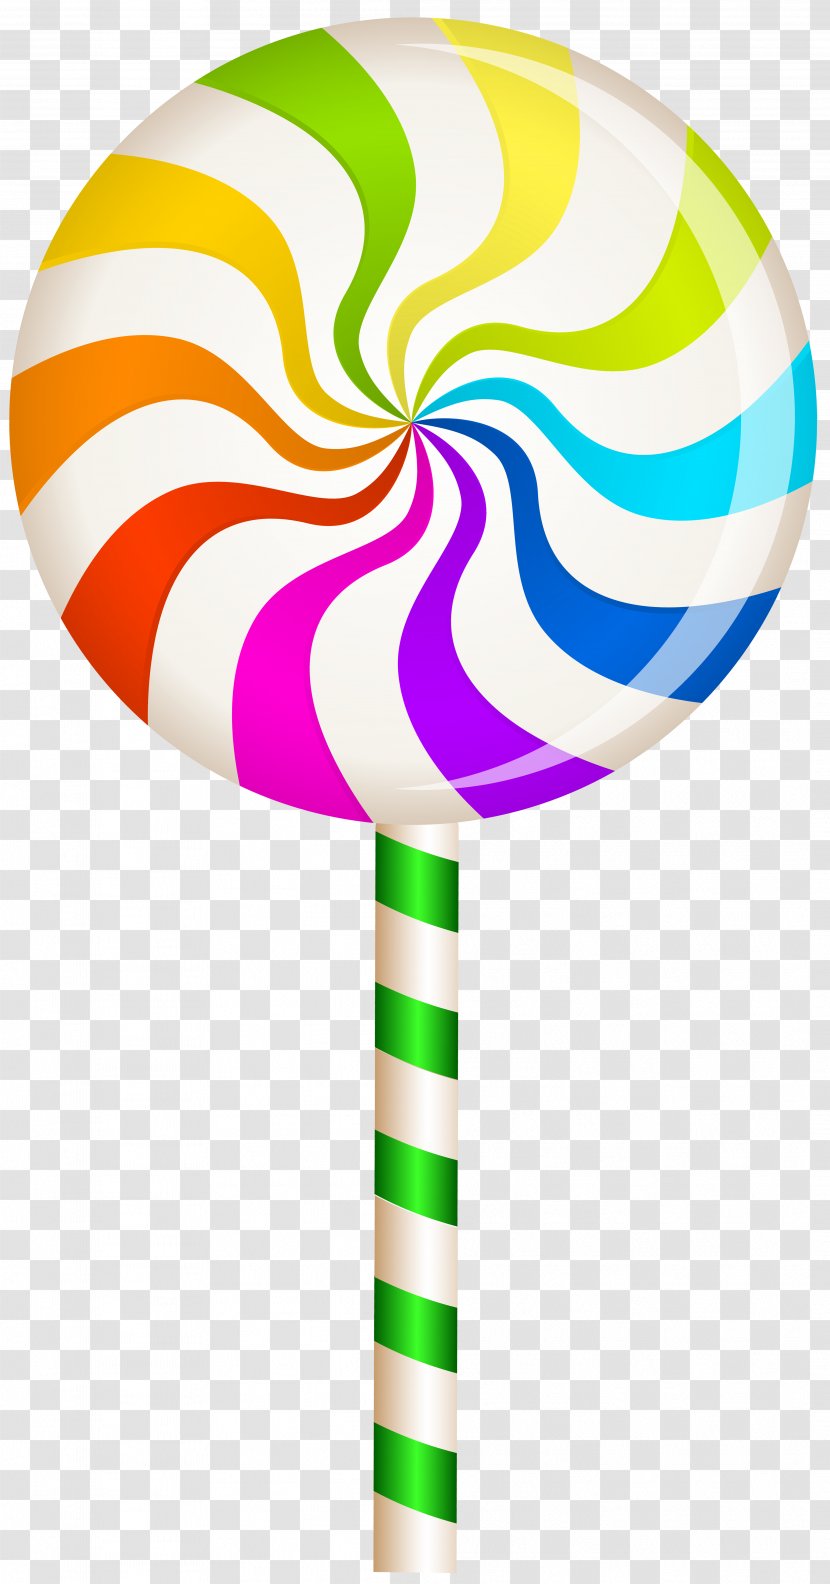 Lollipop Candy Confectionery Clip Art - Hard - Multicolor Swirl Image Transparent PNG